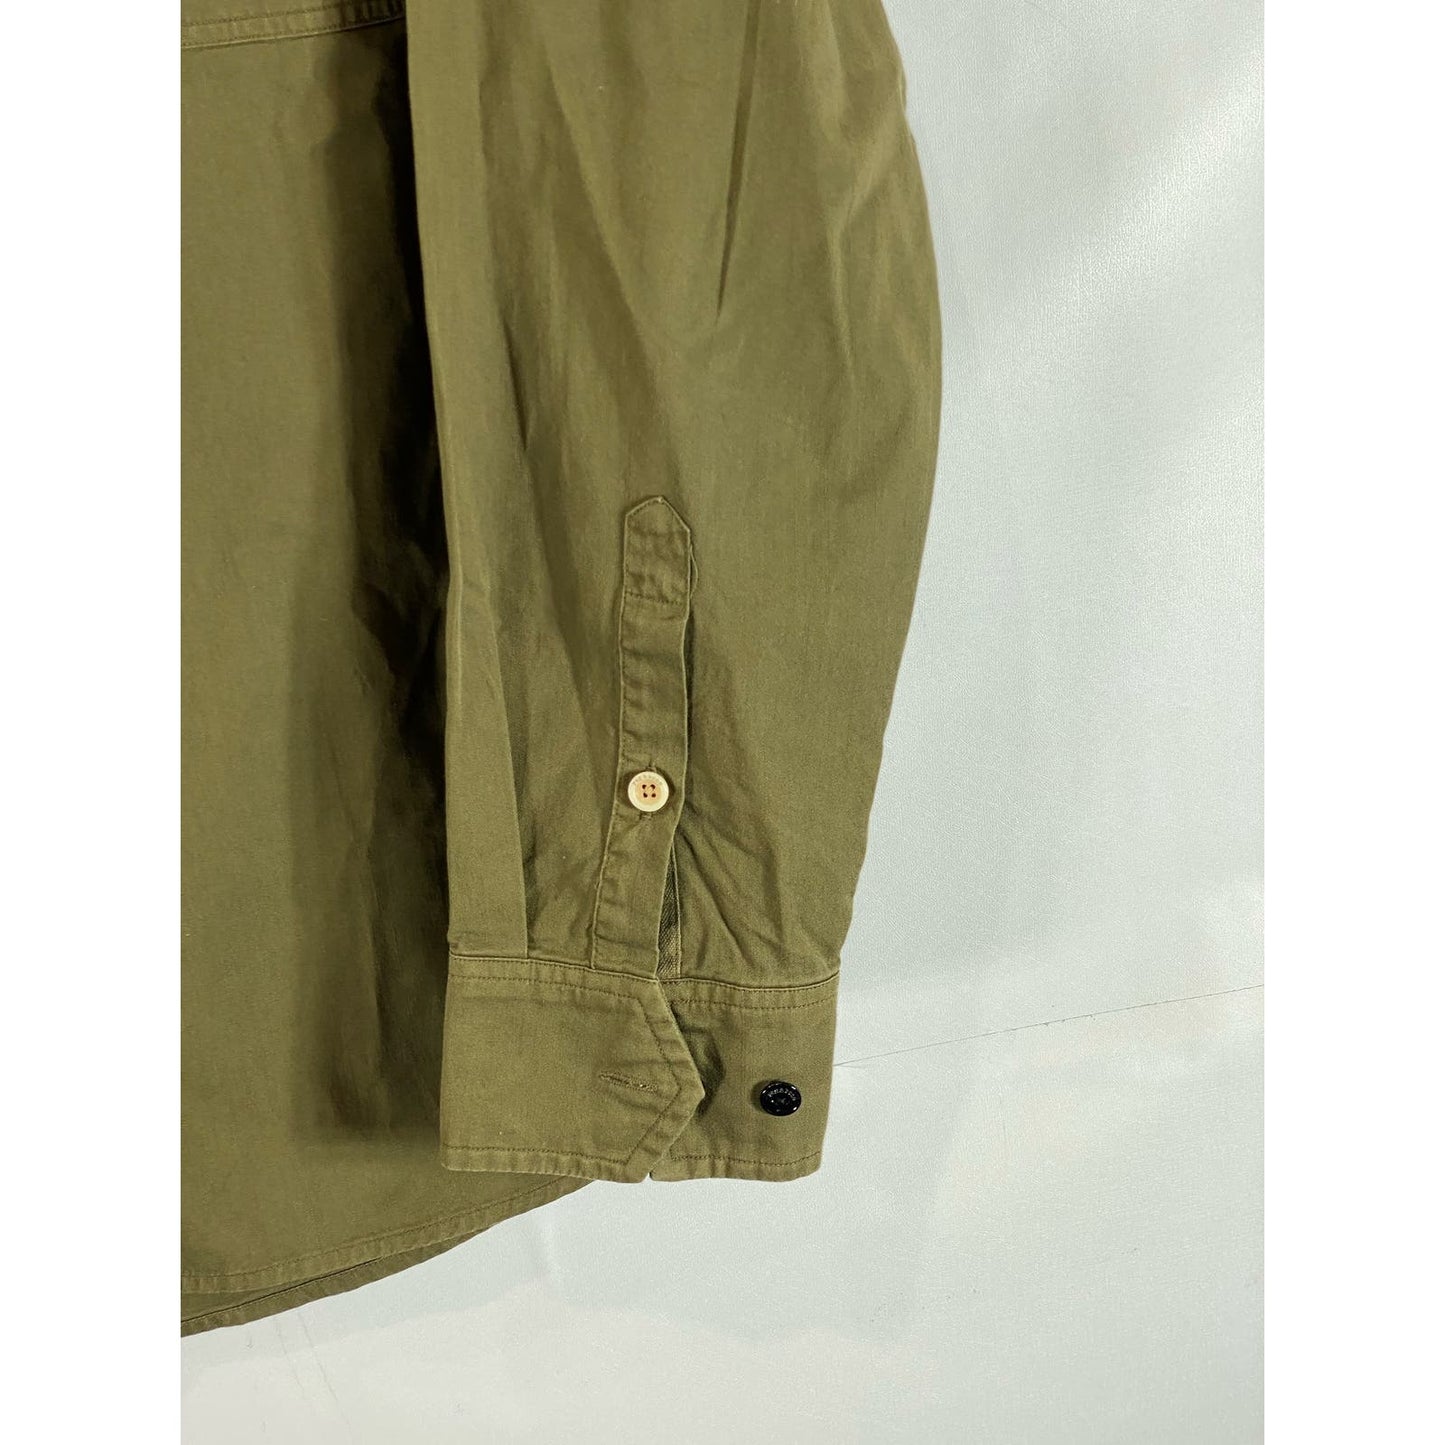 RAG & BONE Men's Army Green Western Button-Up Long Sleeve Shirt SZ M